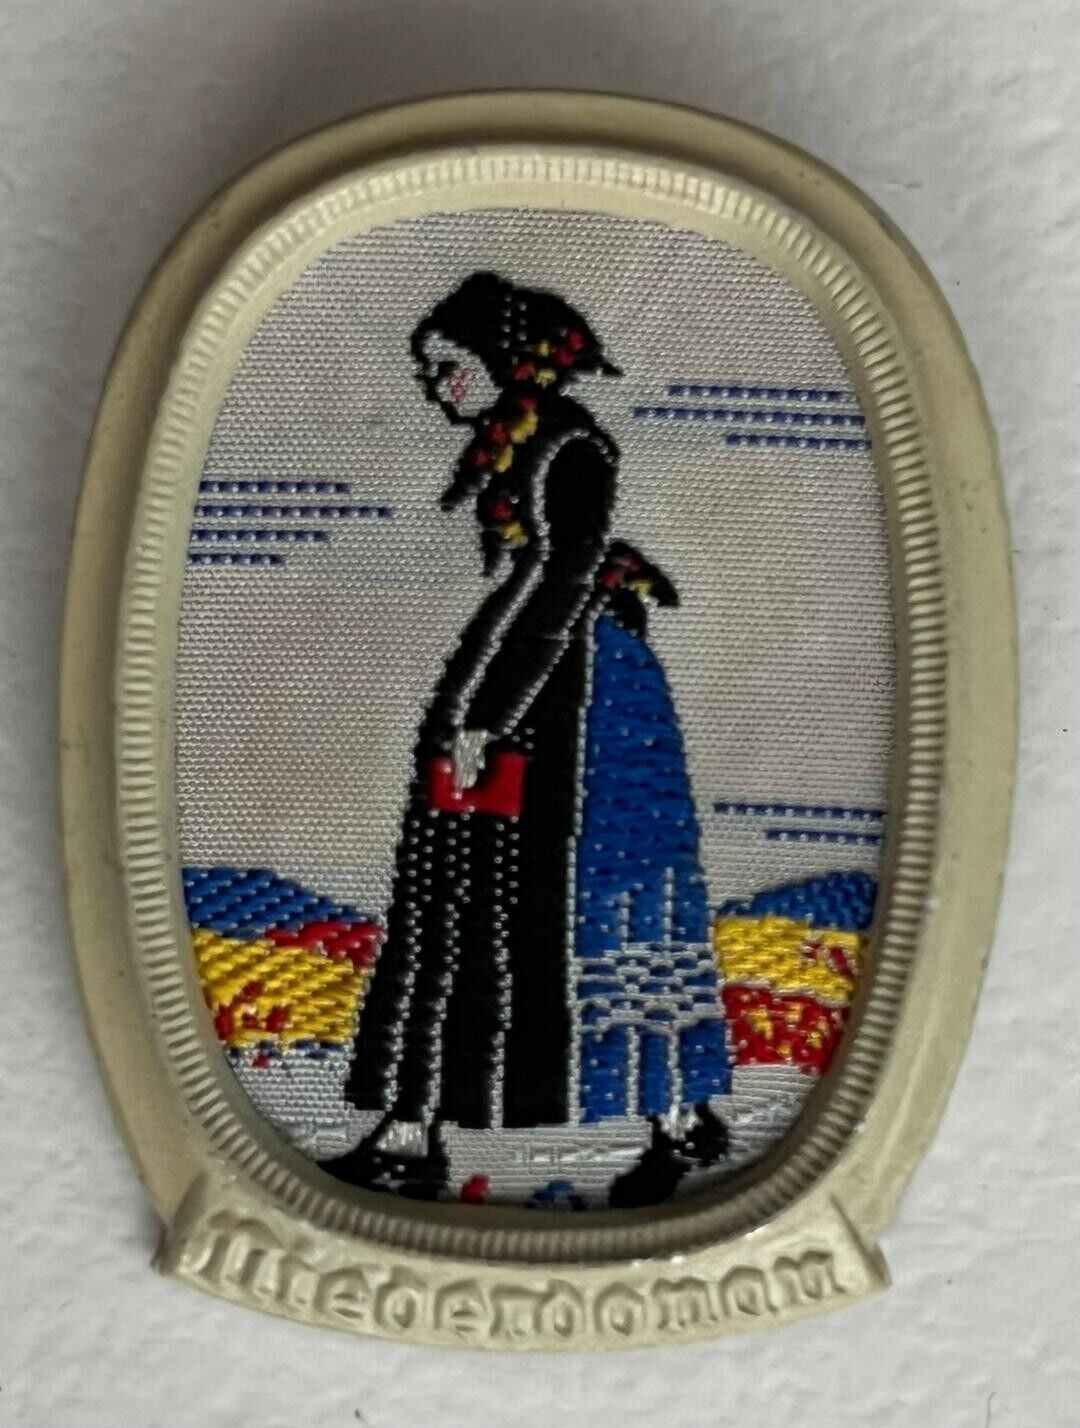 Lower Danube badge pin woman in folk costume folklore badge with woman in costume